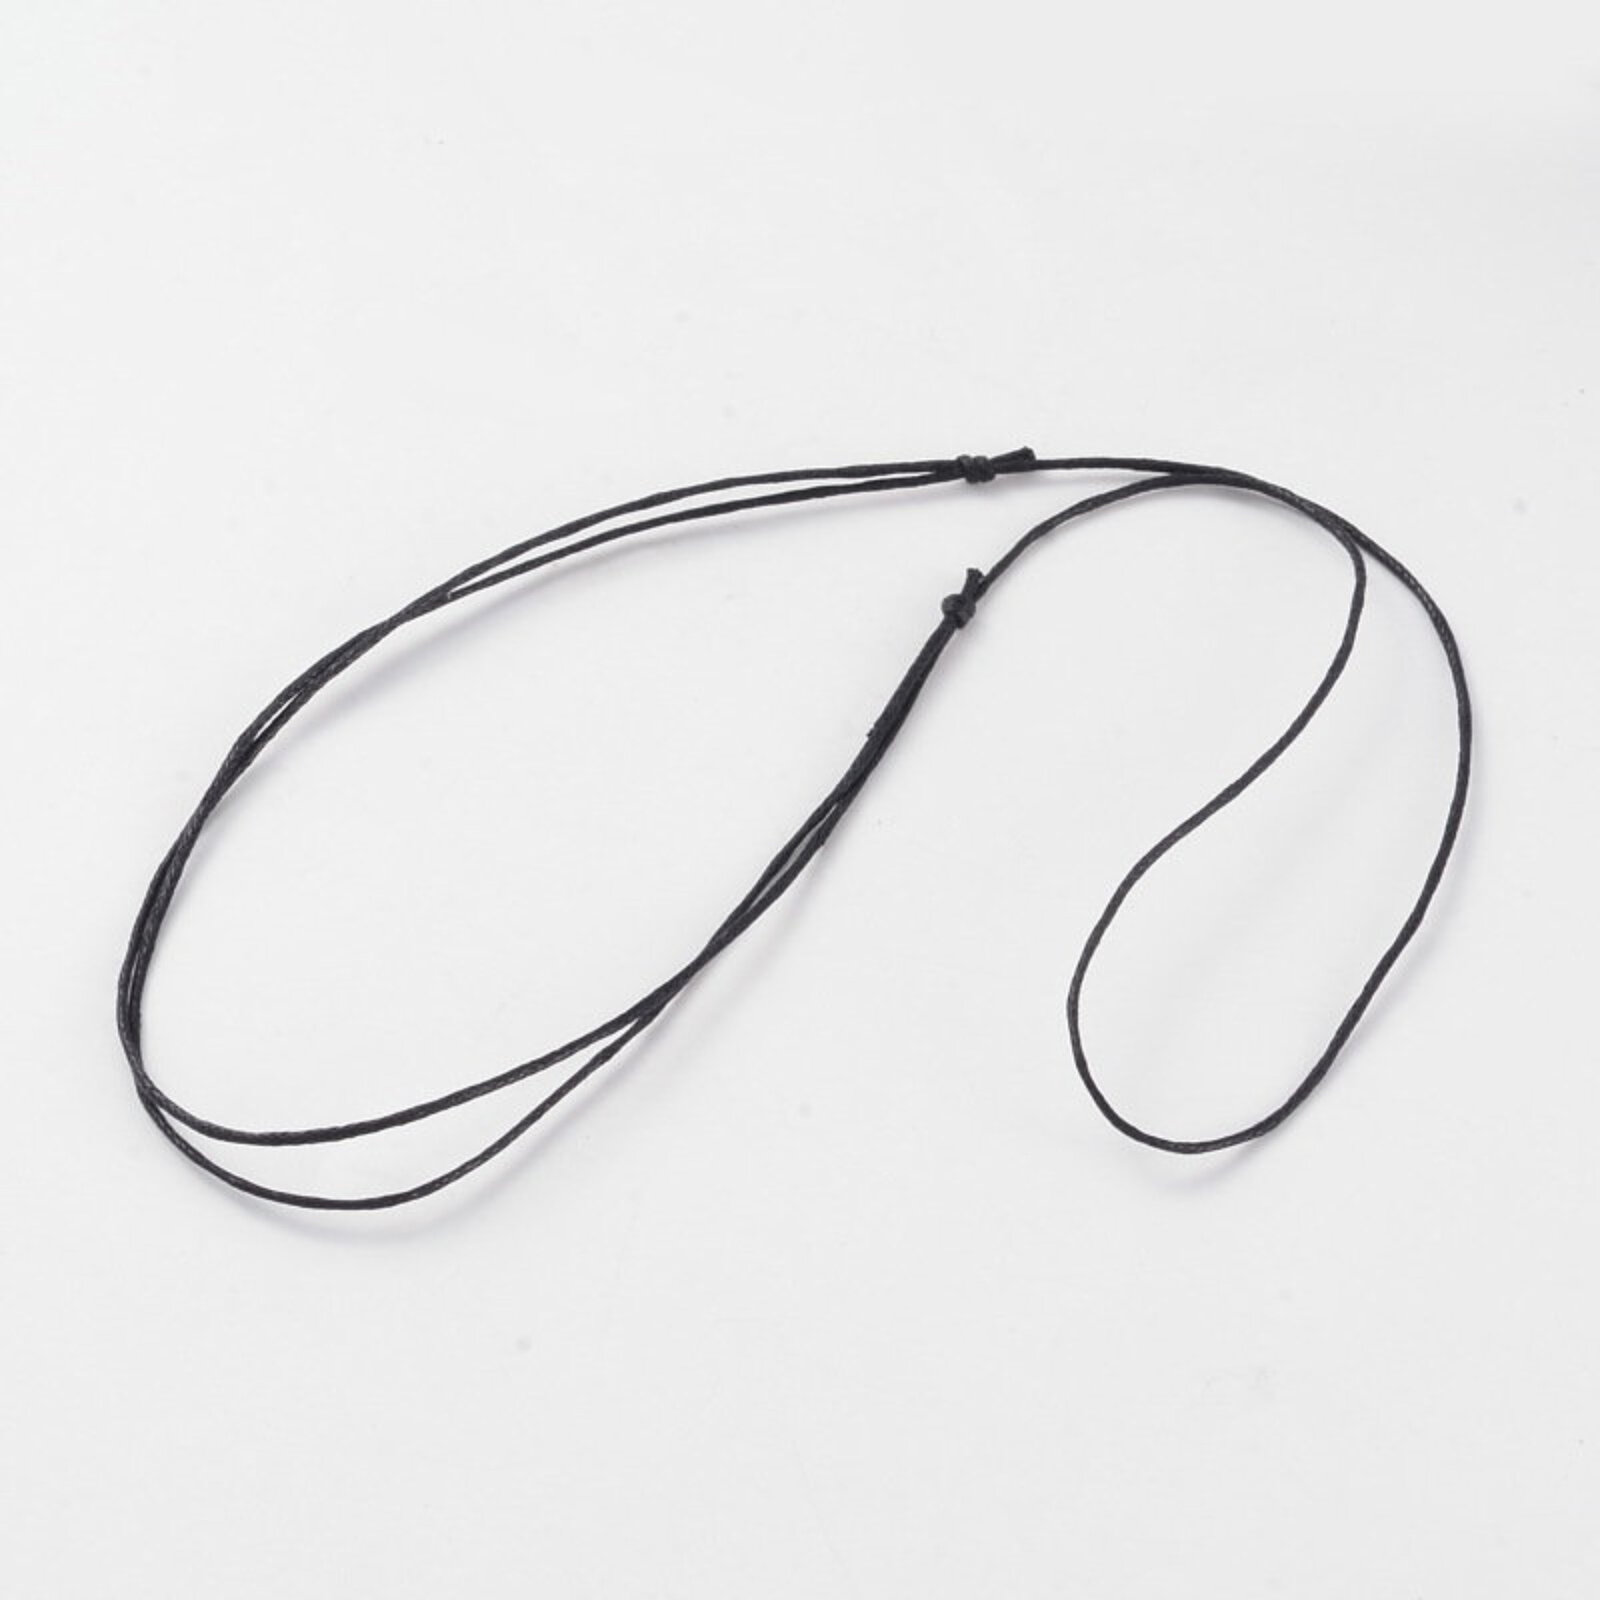 Black Cord Necklace Extendable